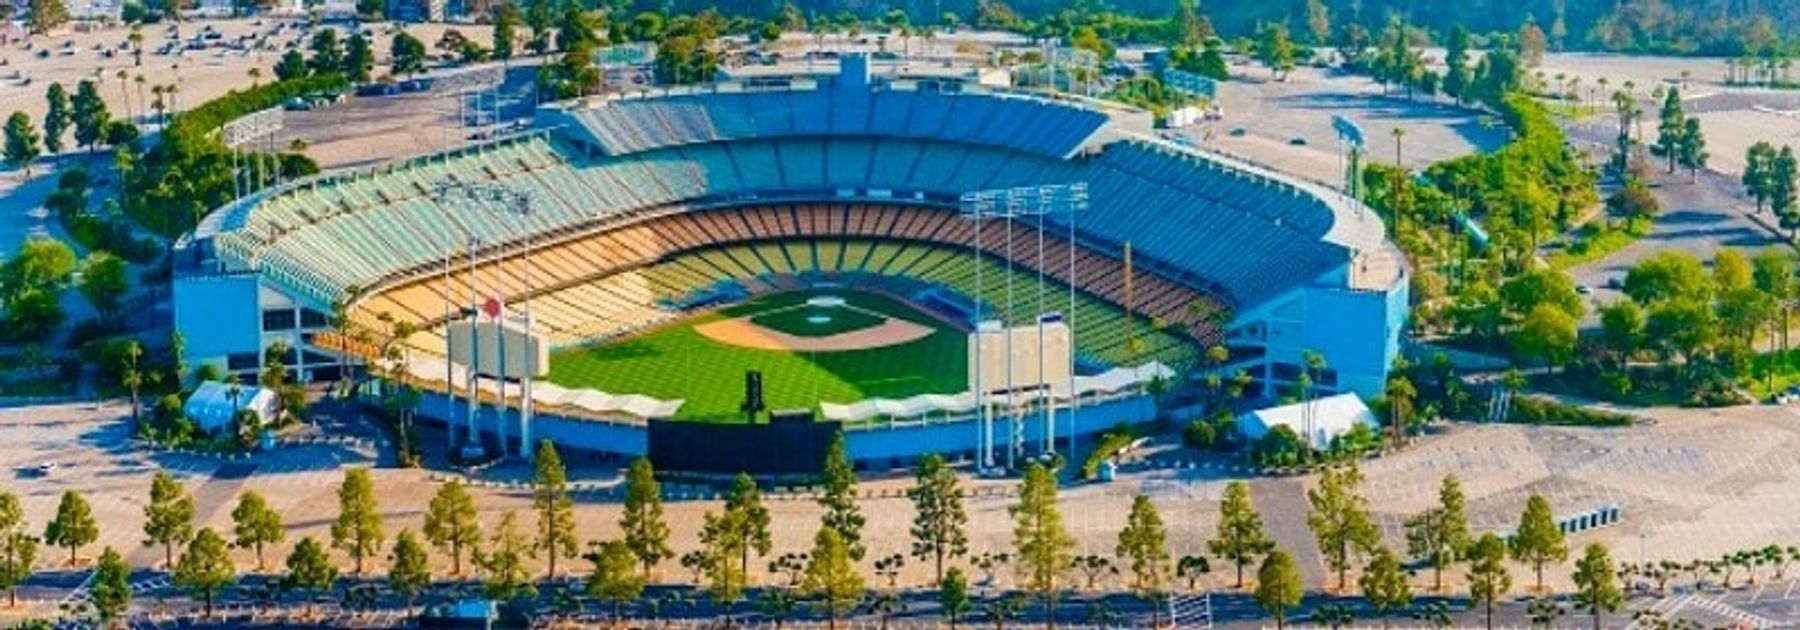 Dodger Stadium Guide - CBS Los Angeles